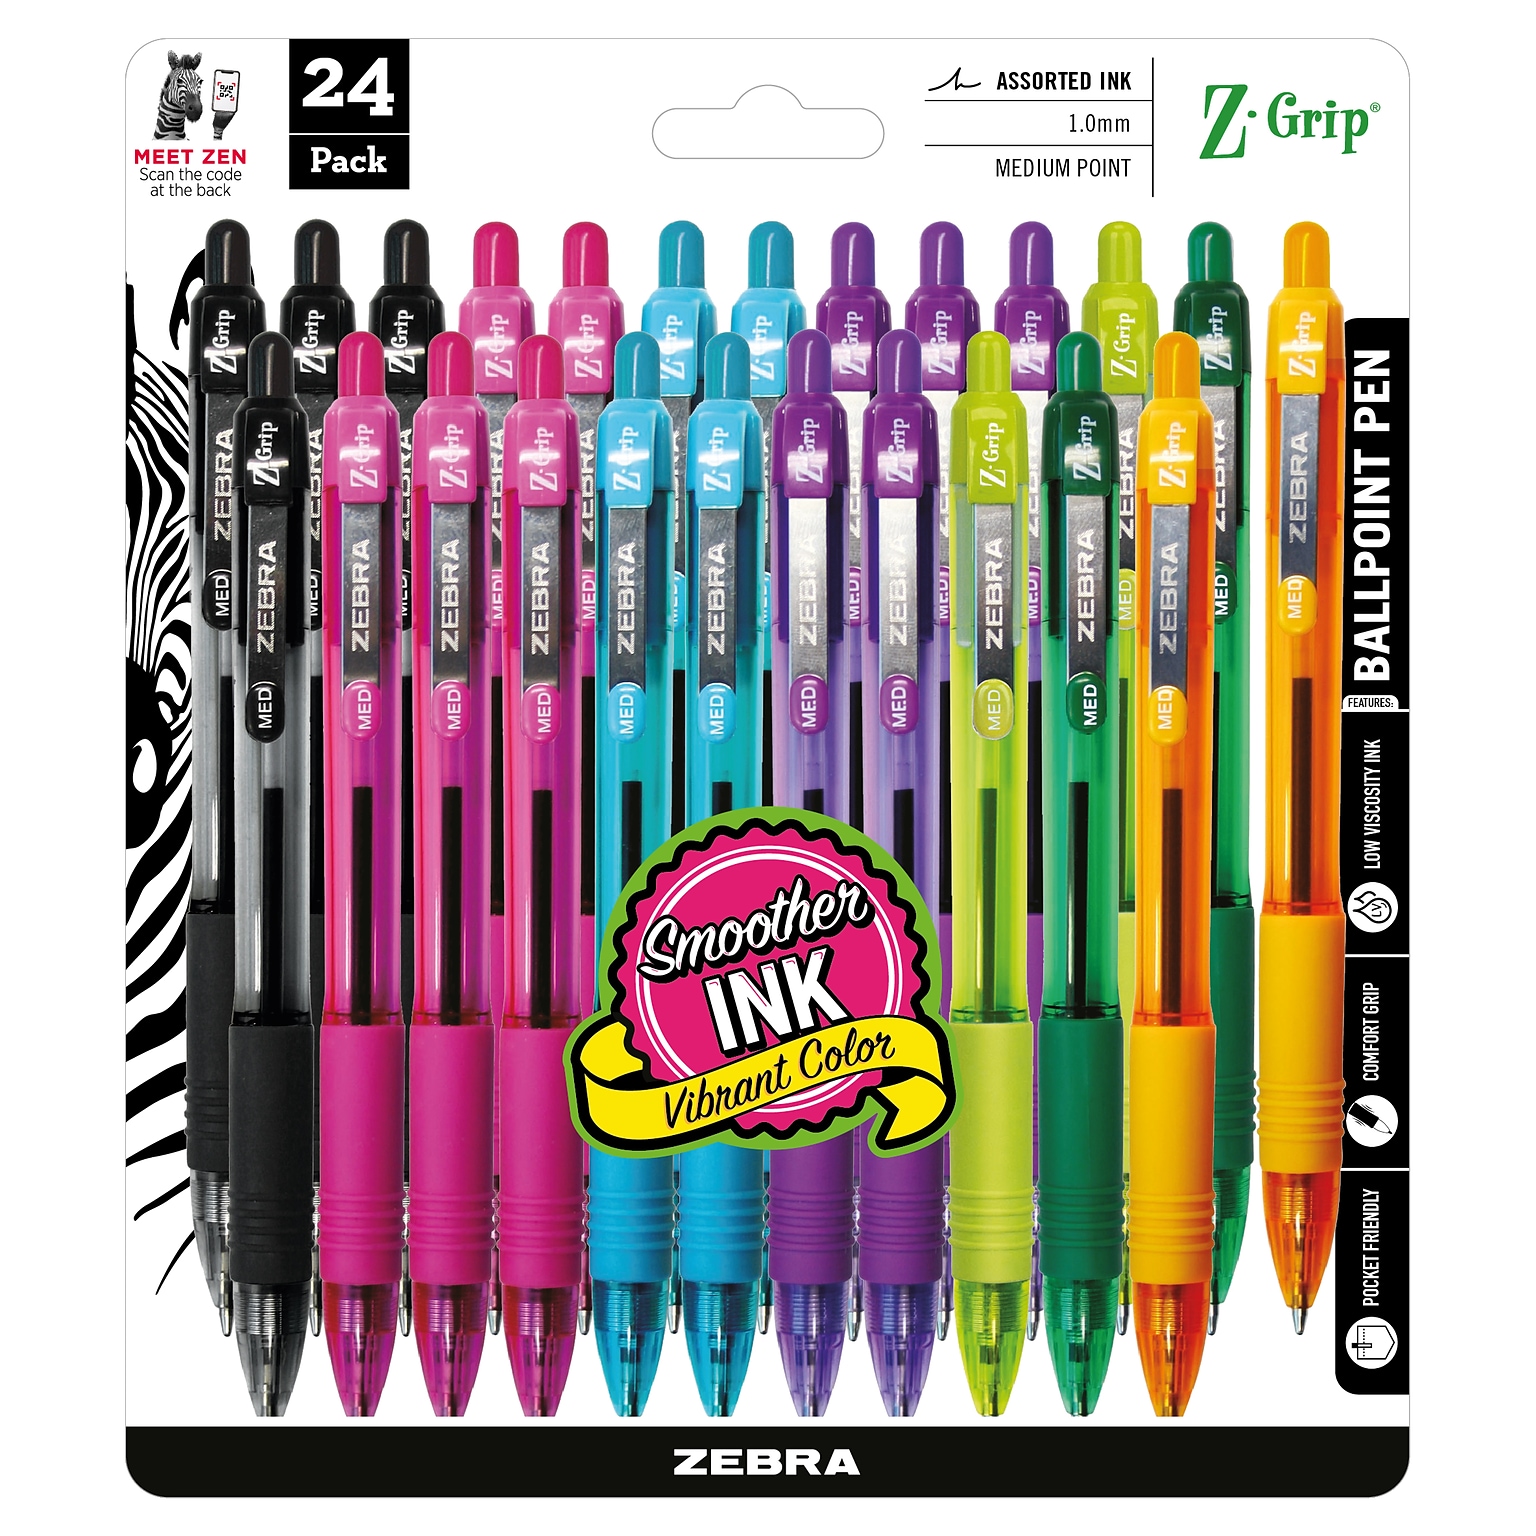 Zebra Z-Grip Retractable Ballpoint Pen, Medium Point, 1.0mm, Assorted Ink, 24 Pack (12271)